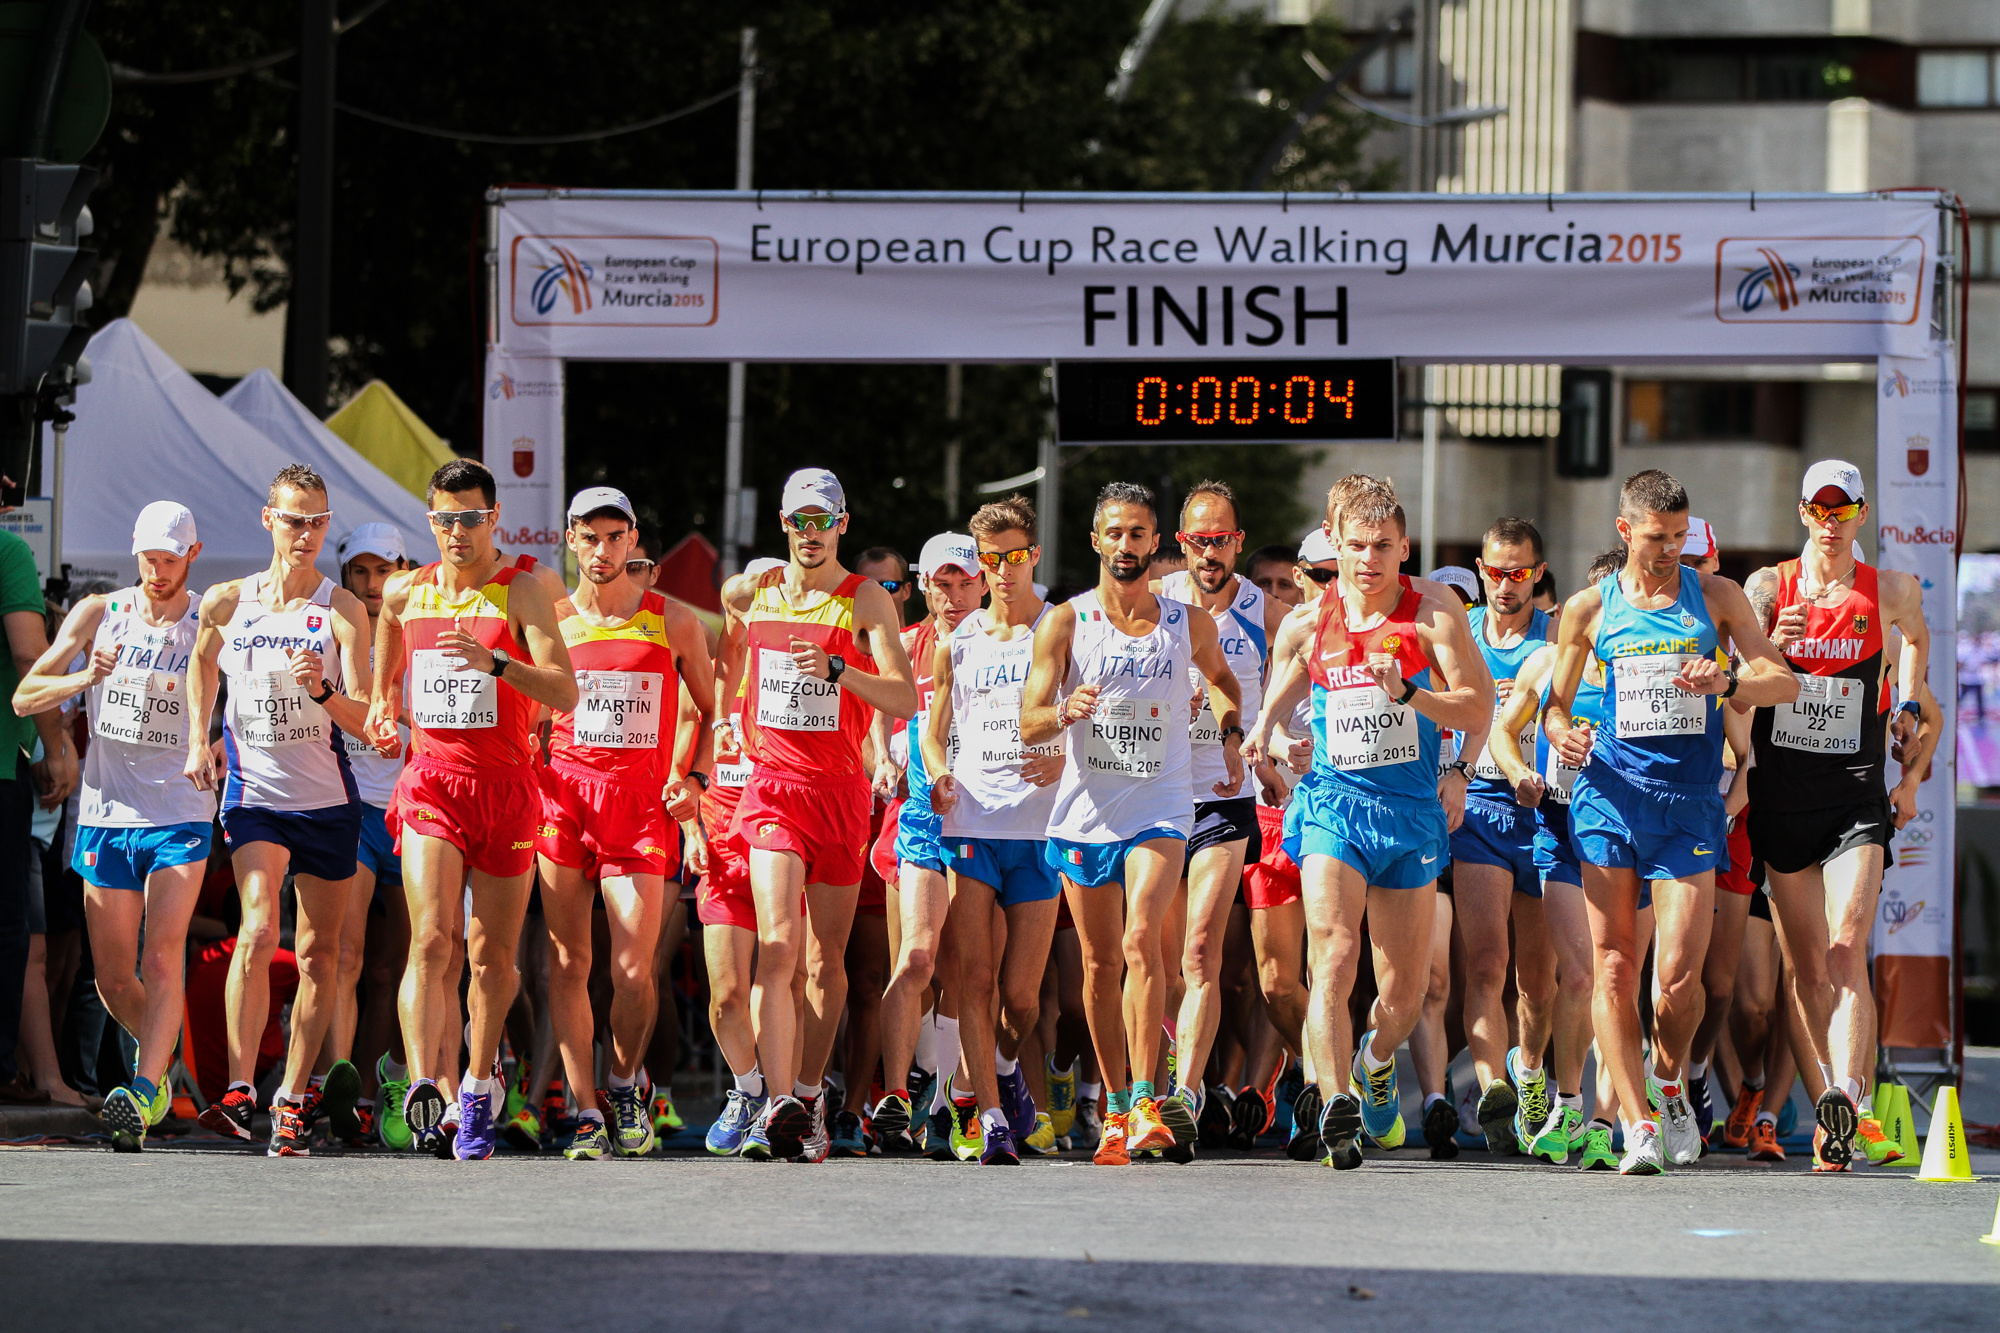 Racewalking: The 2015 European Cup Race Walking Championship in Murcia, Competitive sports discipline. 2000x1340 HD Wallpaper.